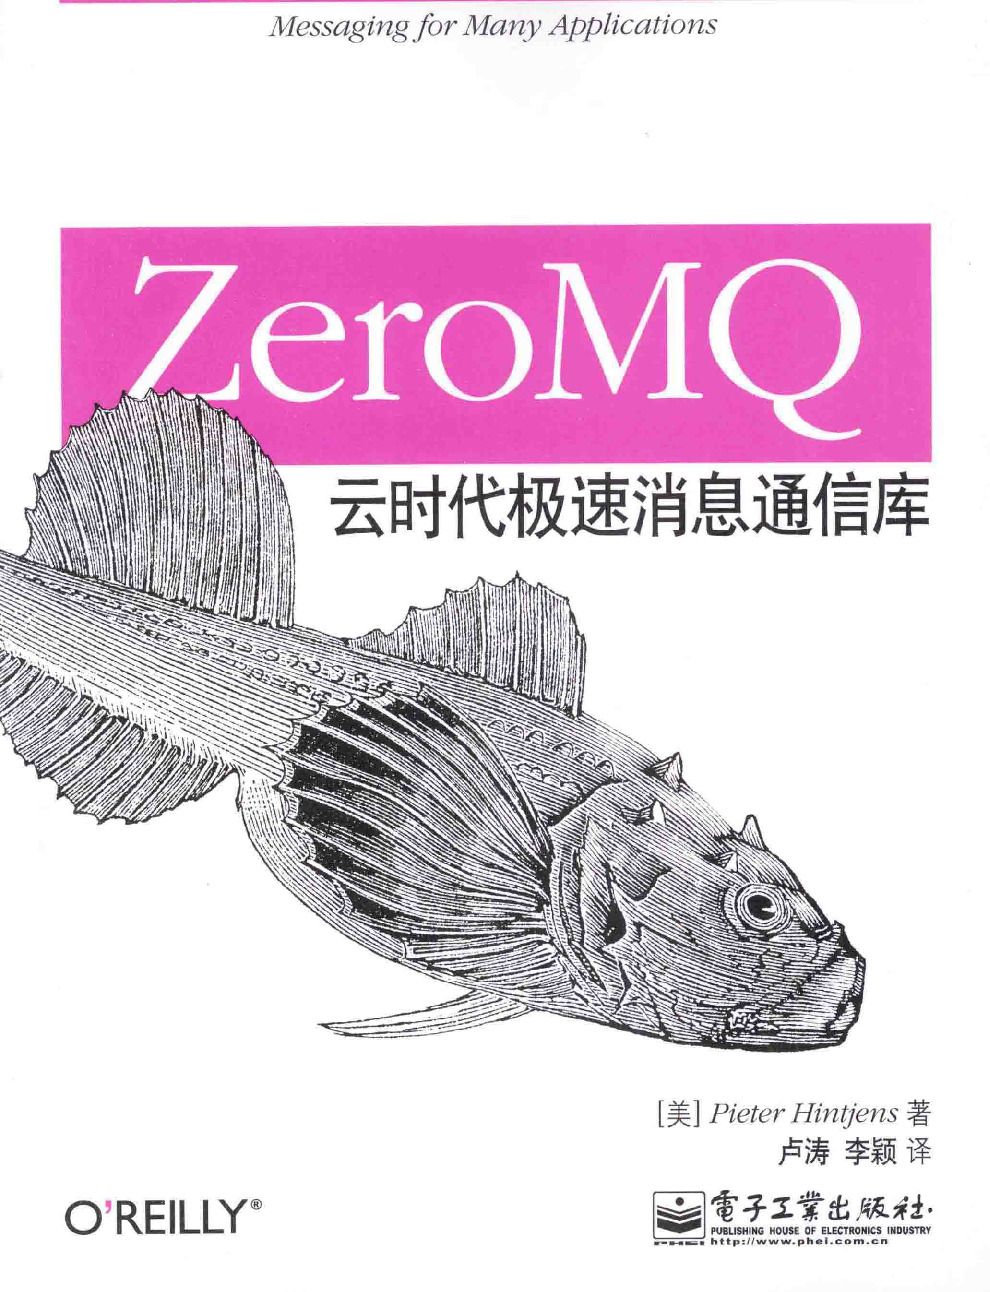 ZeroMQ 云时代极速消息通信库